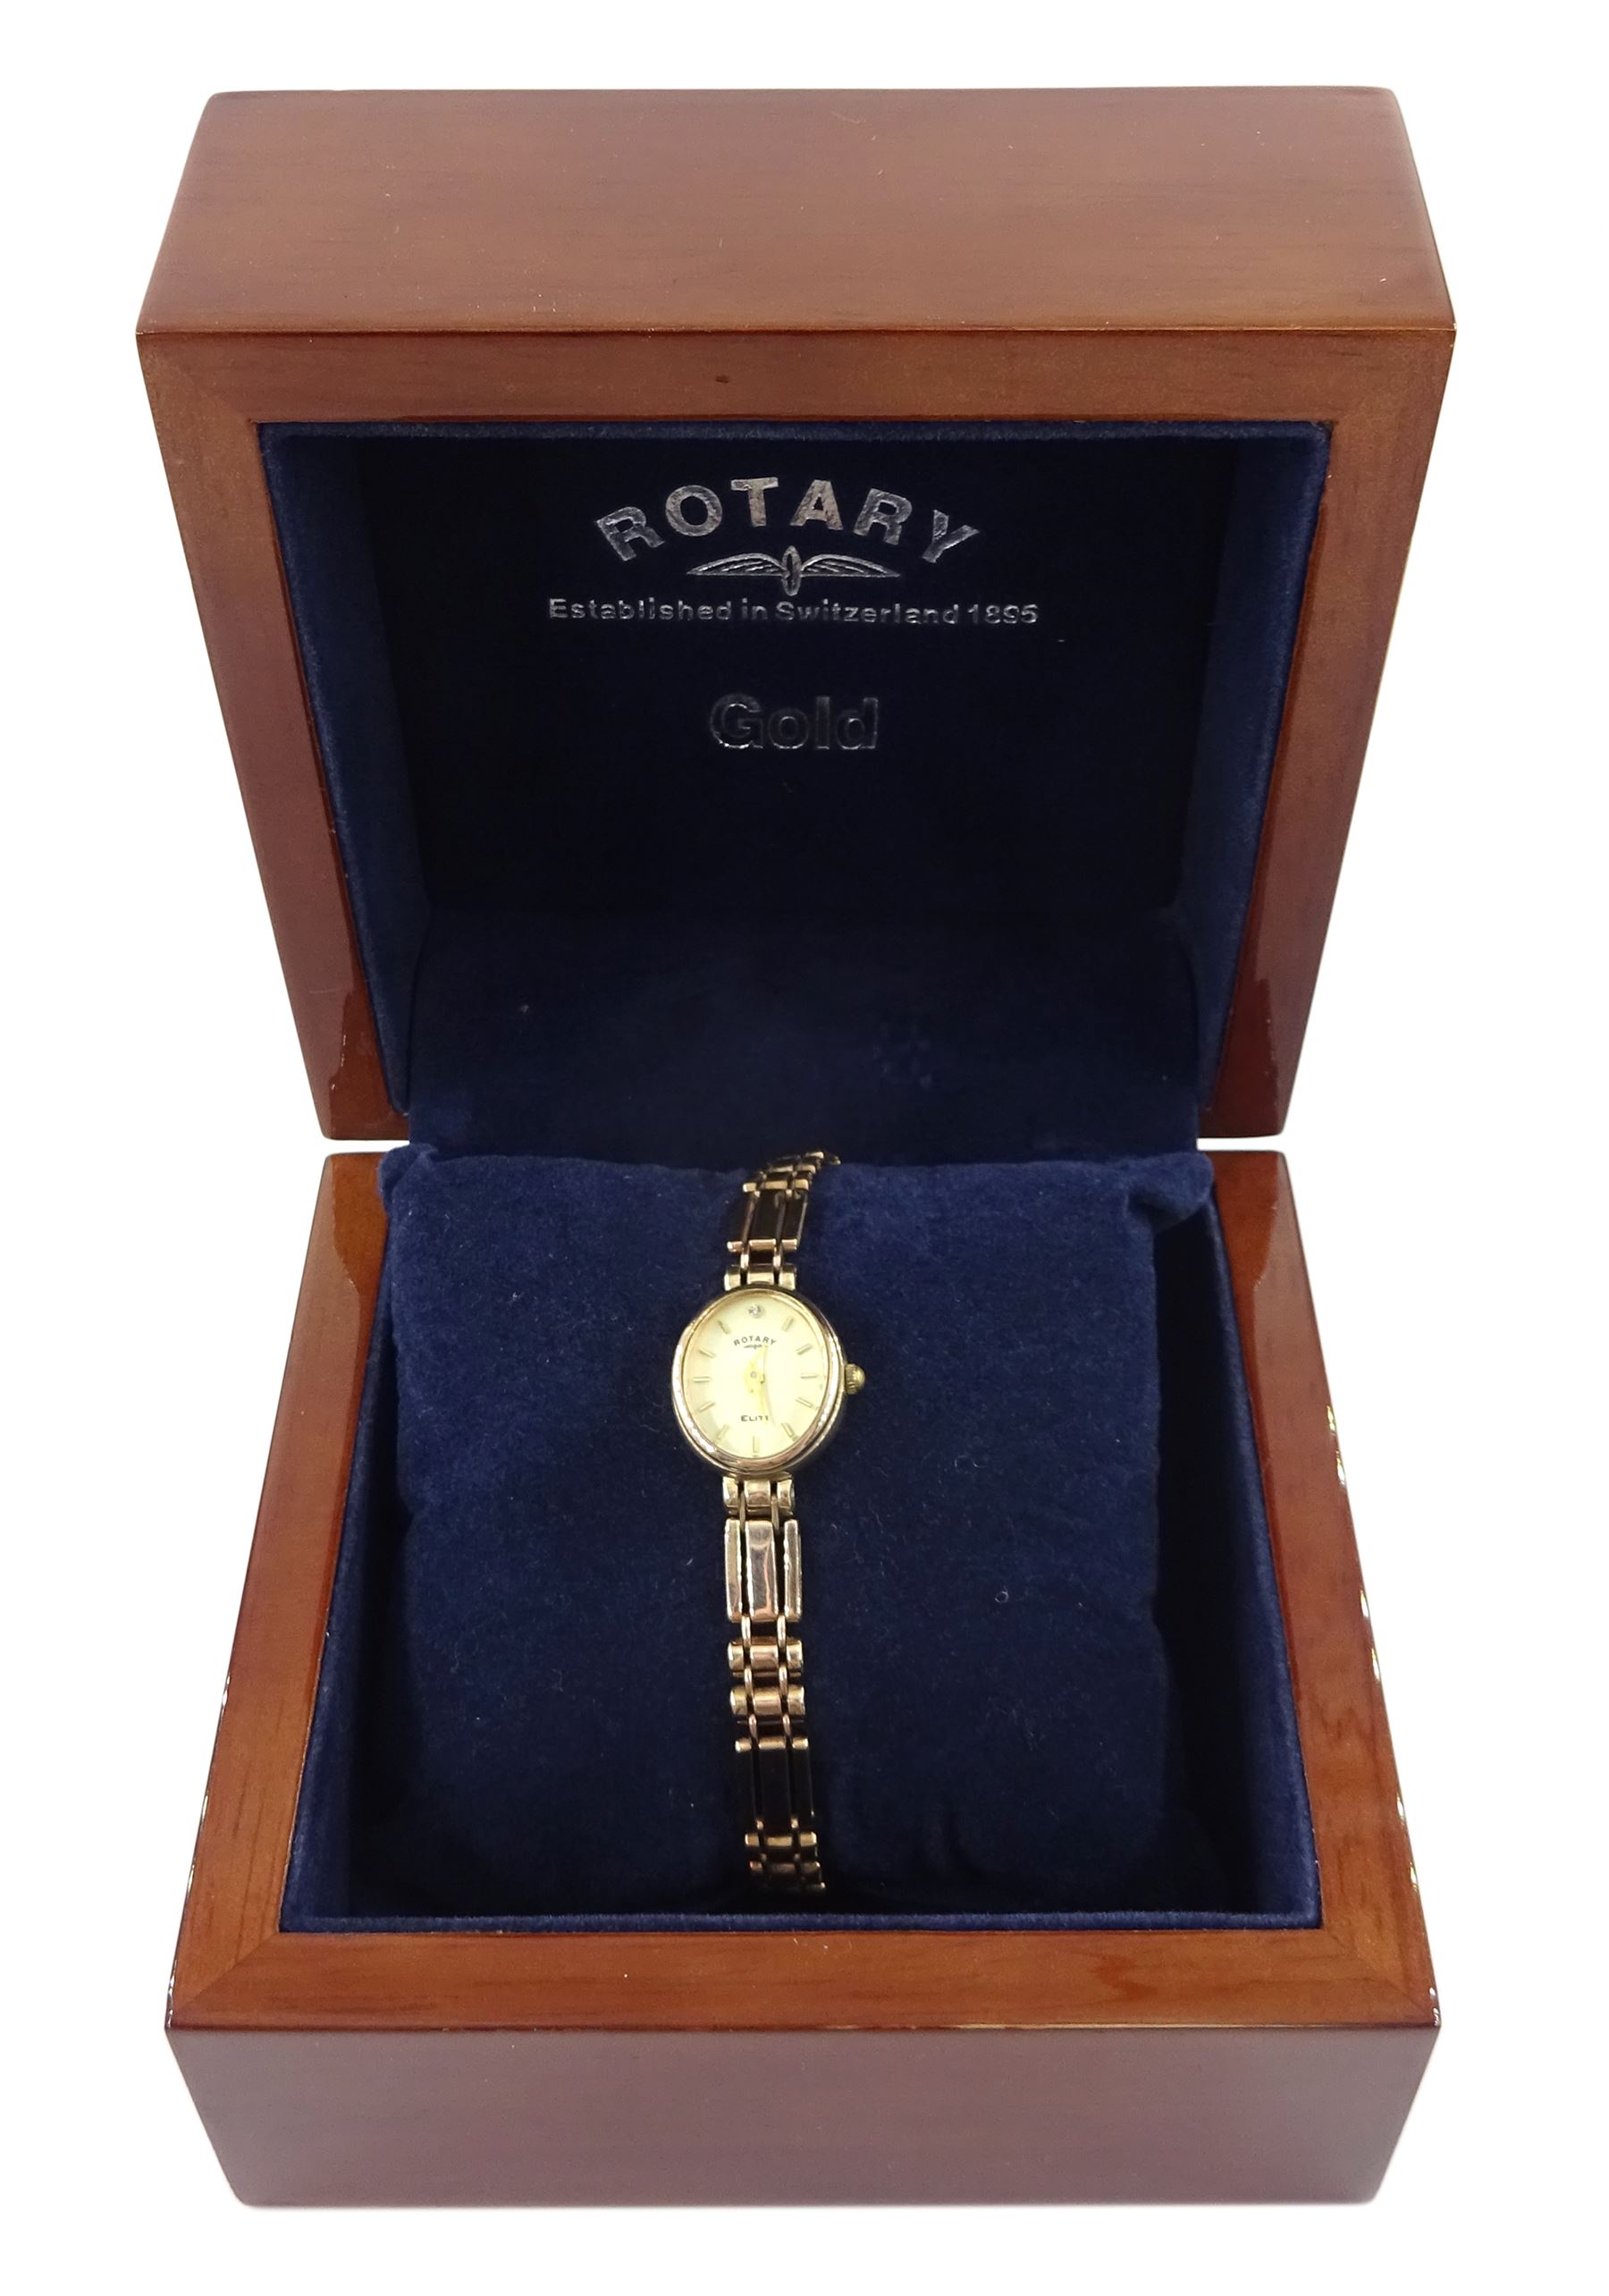 Rotary Elite 9ct gold quartz bracelet wristwatch - Image 3 of 4